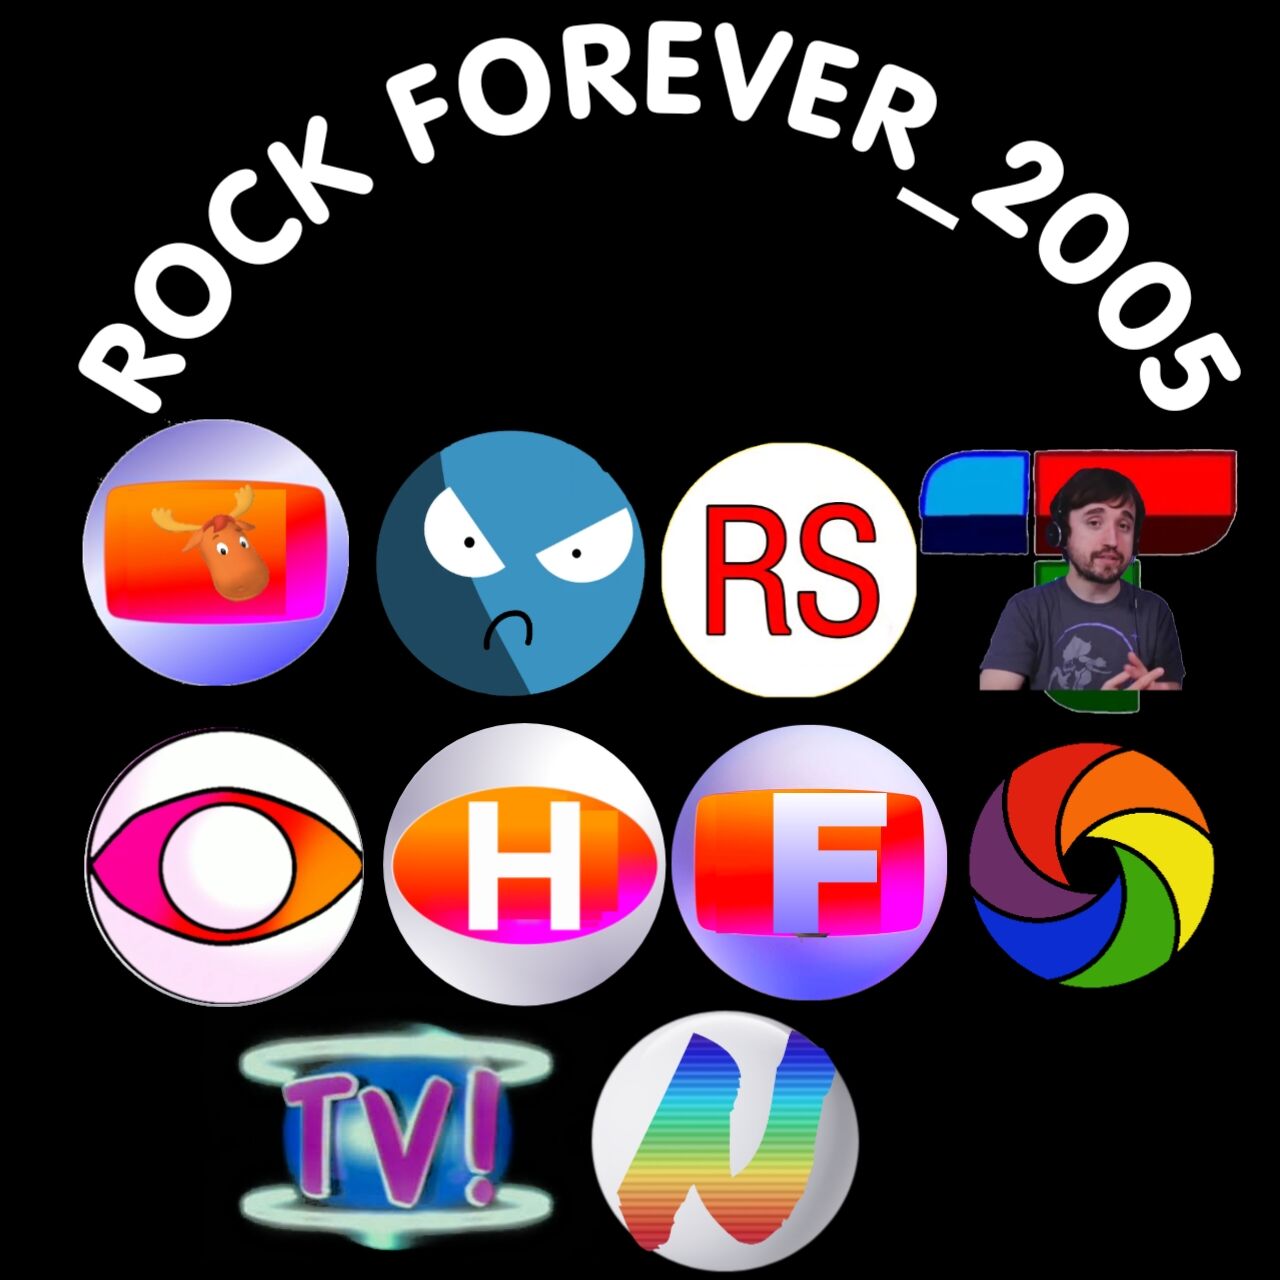 Rock Forever 2005, Bravopédia Wiki